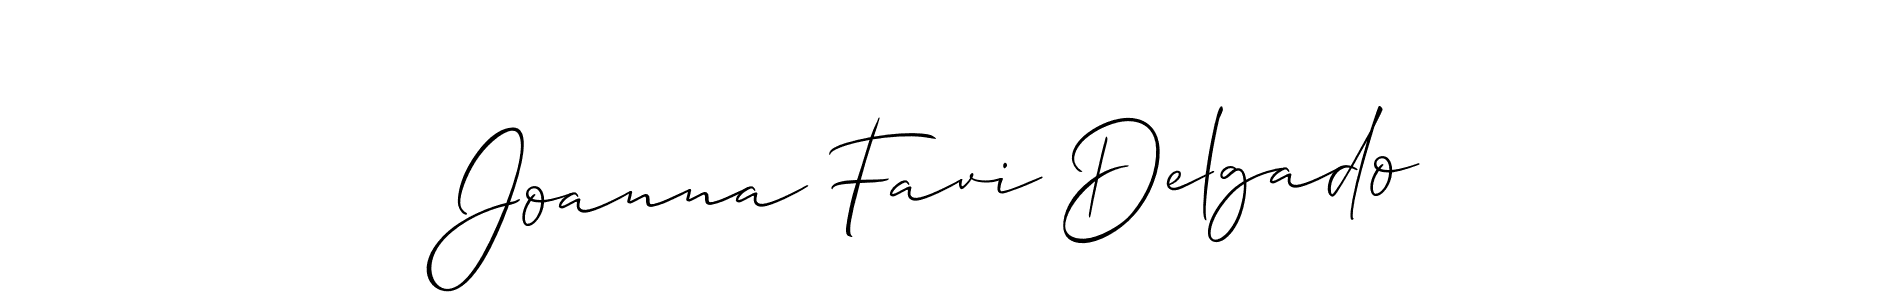 How to Draw Joanna Favi Delgado signature style? Allison_Script is a latest design signature styles for name Joanna Favi Delgado. Joanna Favi Delgado signature style 2 images and pictures png